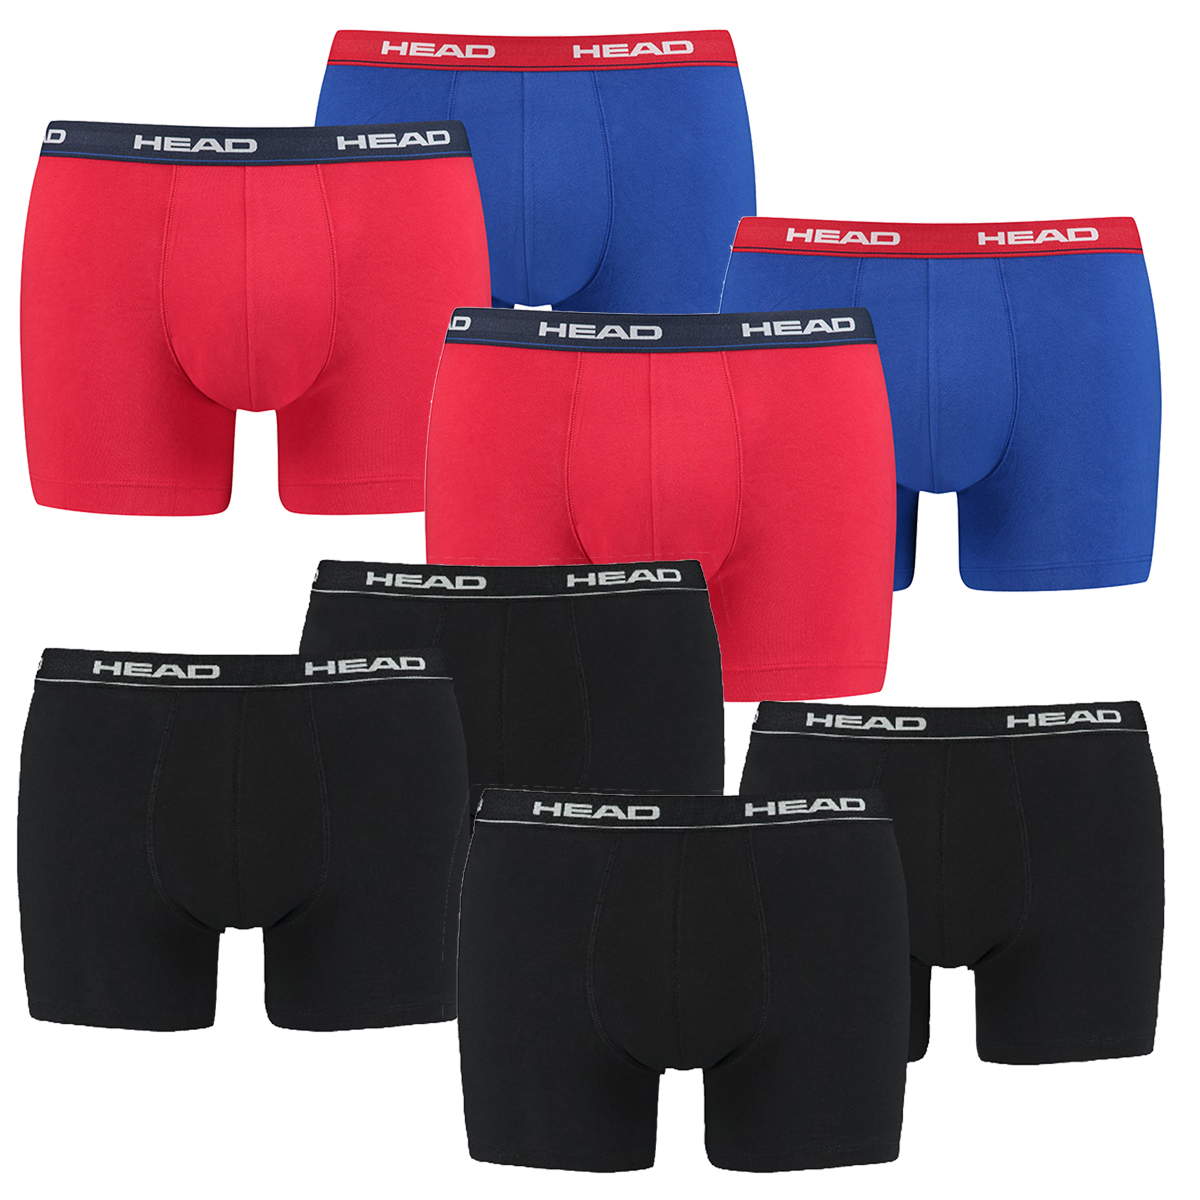 HEAD Herren Boxershorts 841001001 10er Pack, Wäschegröße:M;Artikel:2x2er Red/Blue/Black / 1x2er blue/black / 1x2er Peacoat/Orange